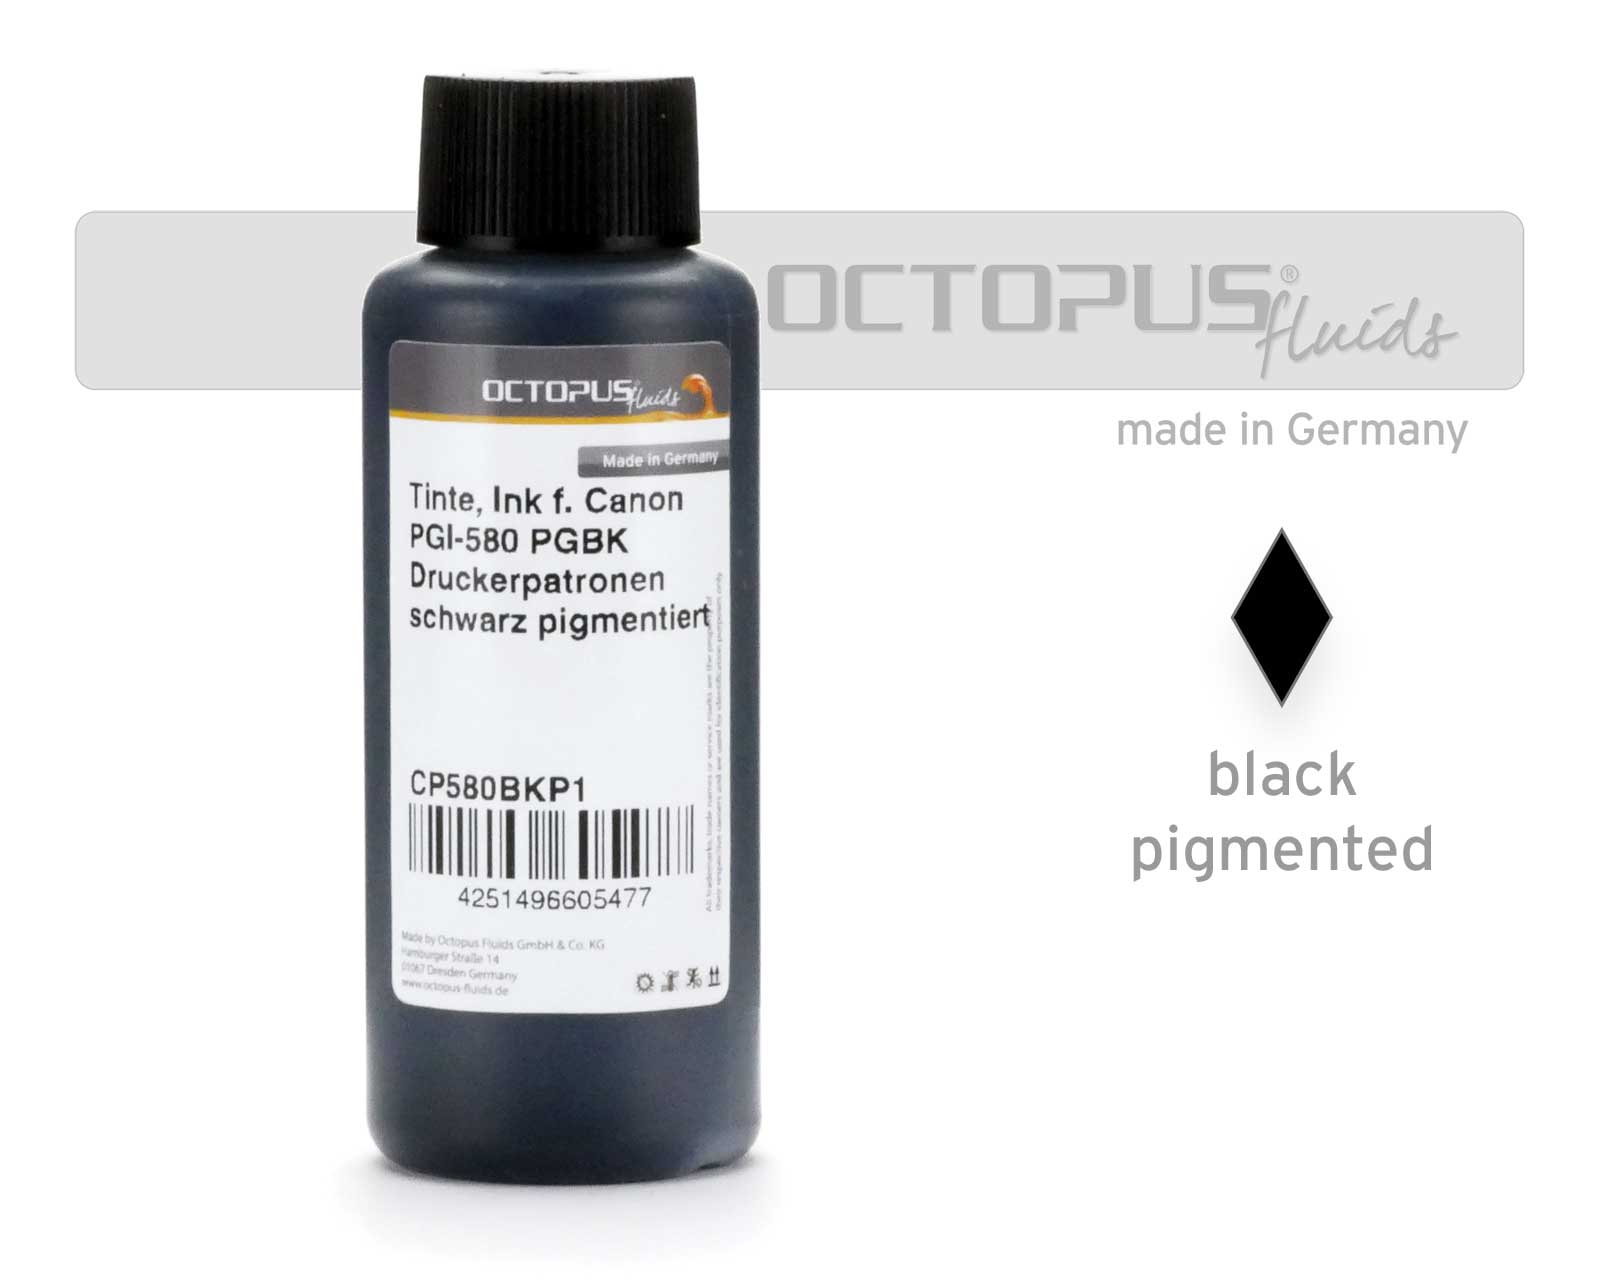 Refill ink for Canon PGI-580 PGBK, Pixma TS 6150, TS8150, TS9150 black pigmented